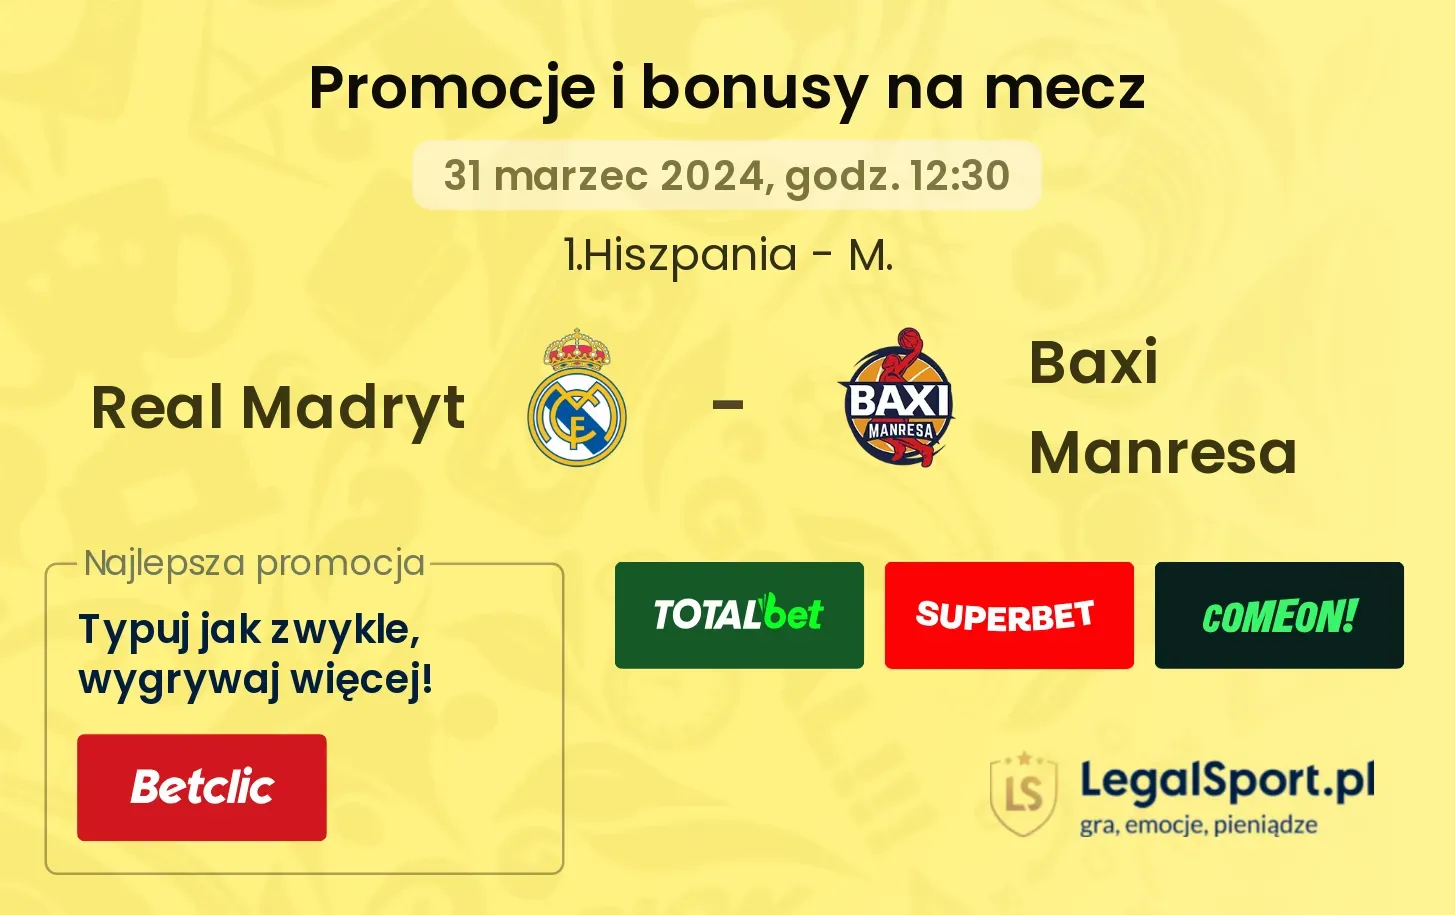 Real Madryt - Baxi Manresa promocje bonusy na mecz